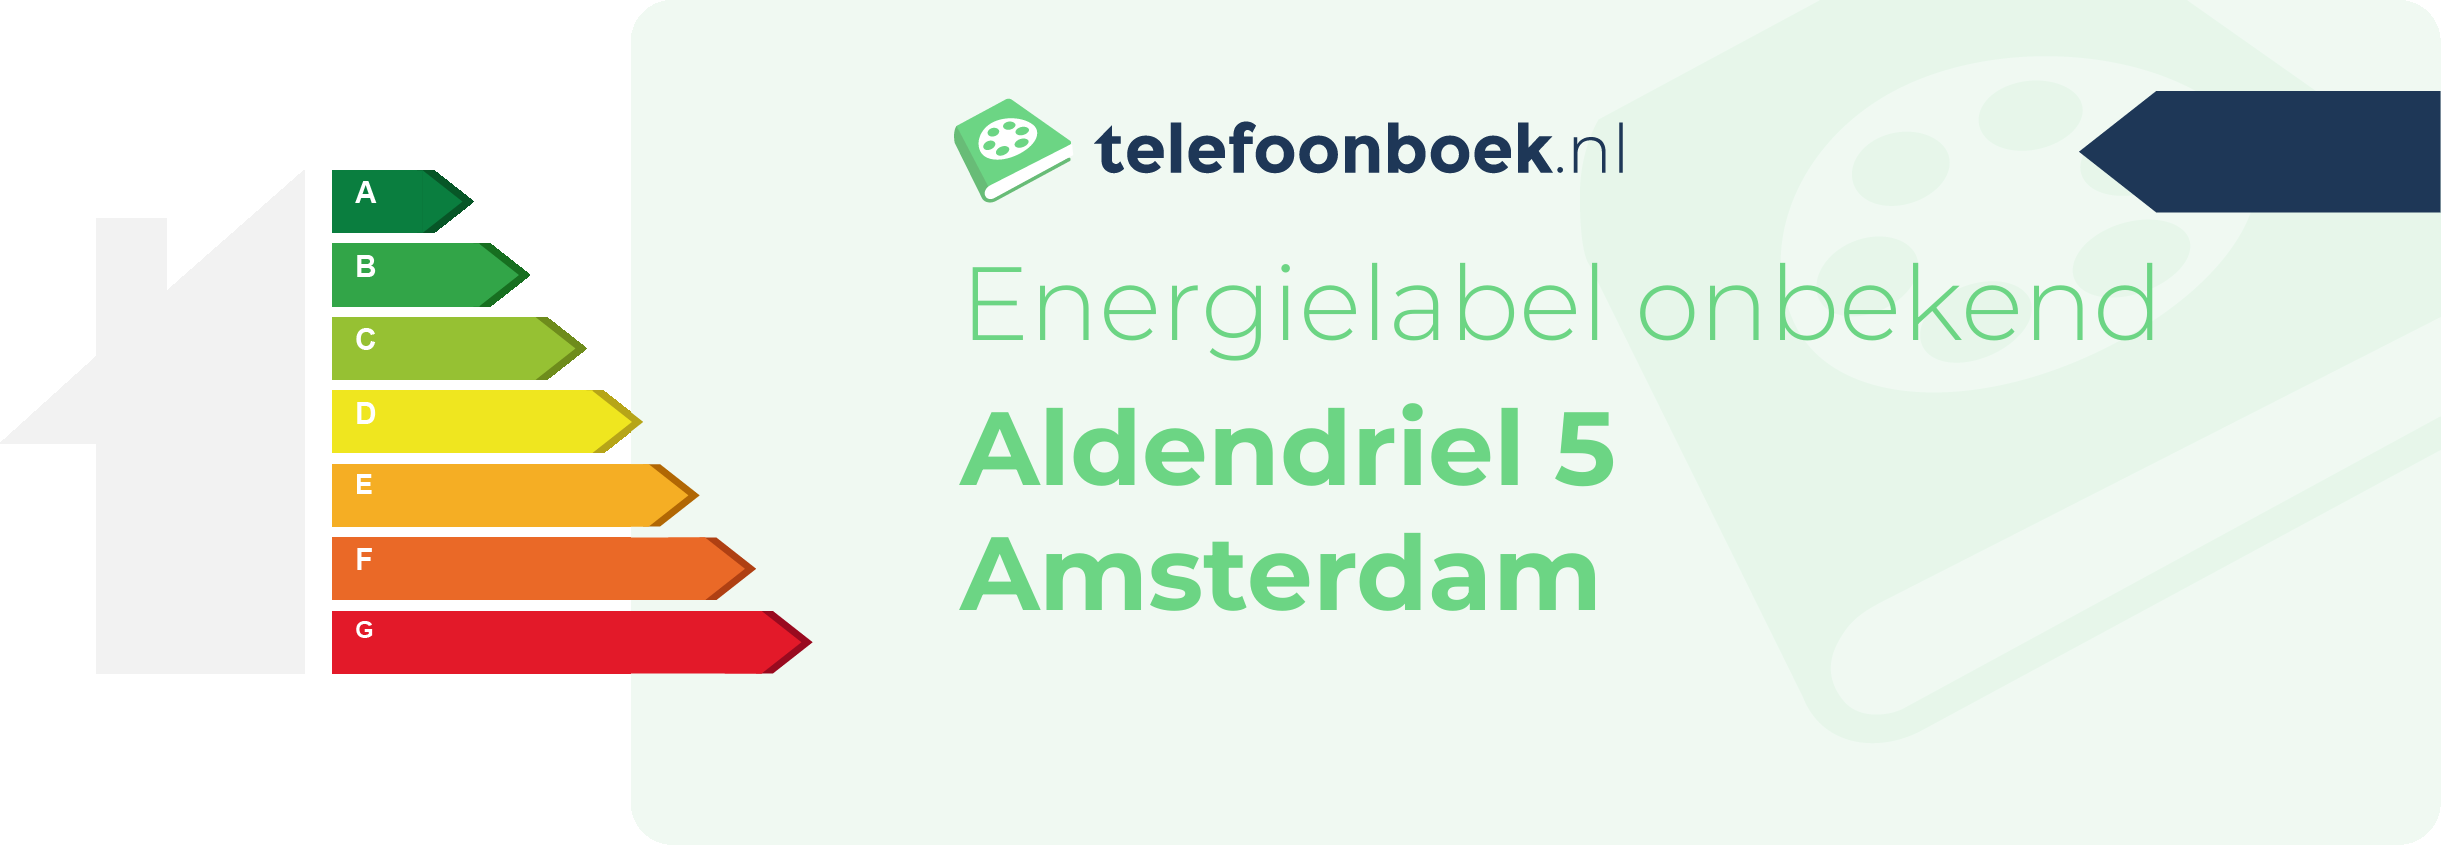 Energielabel Aldendriel 5 Amsterdam